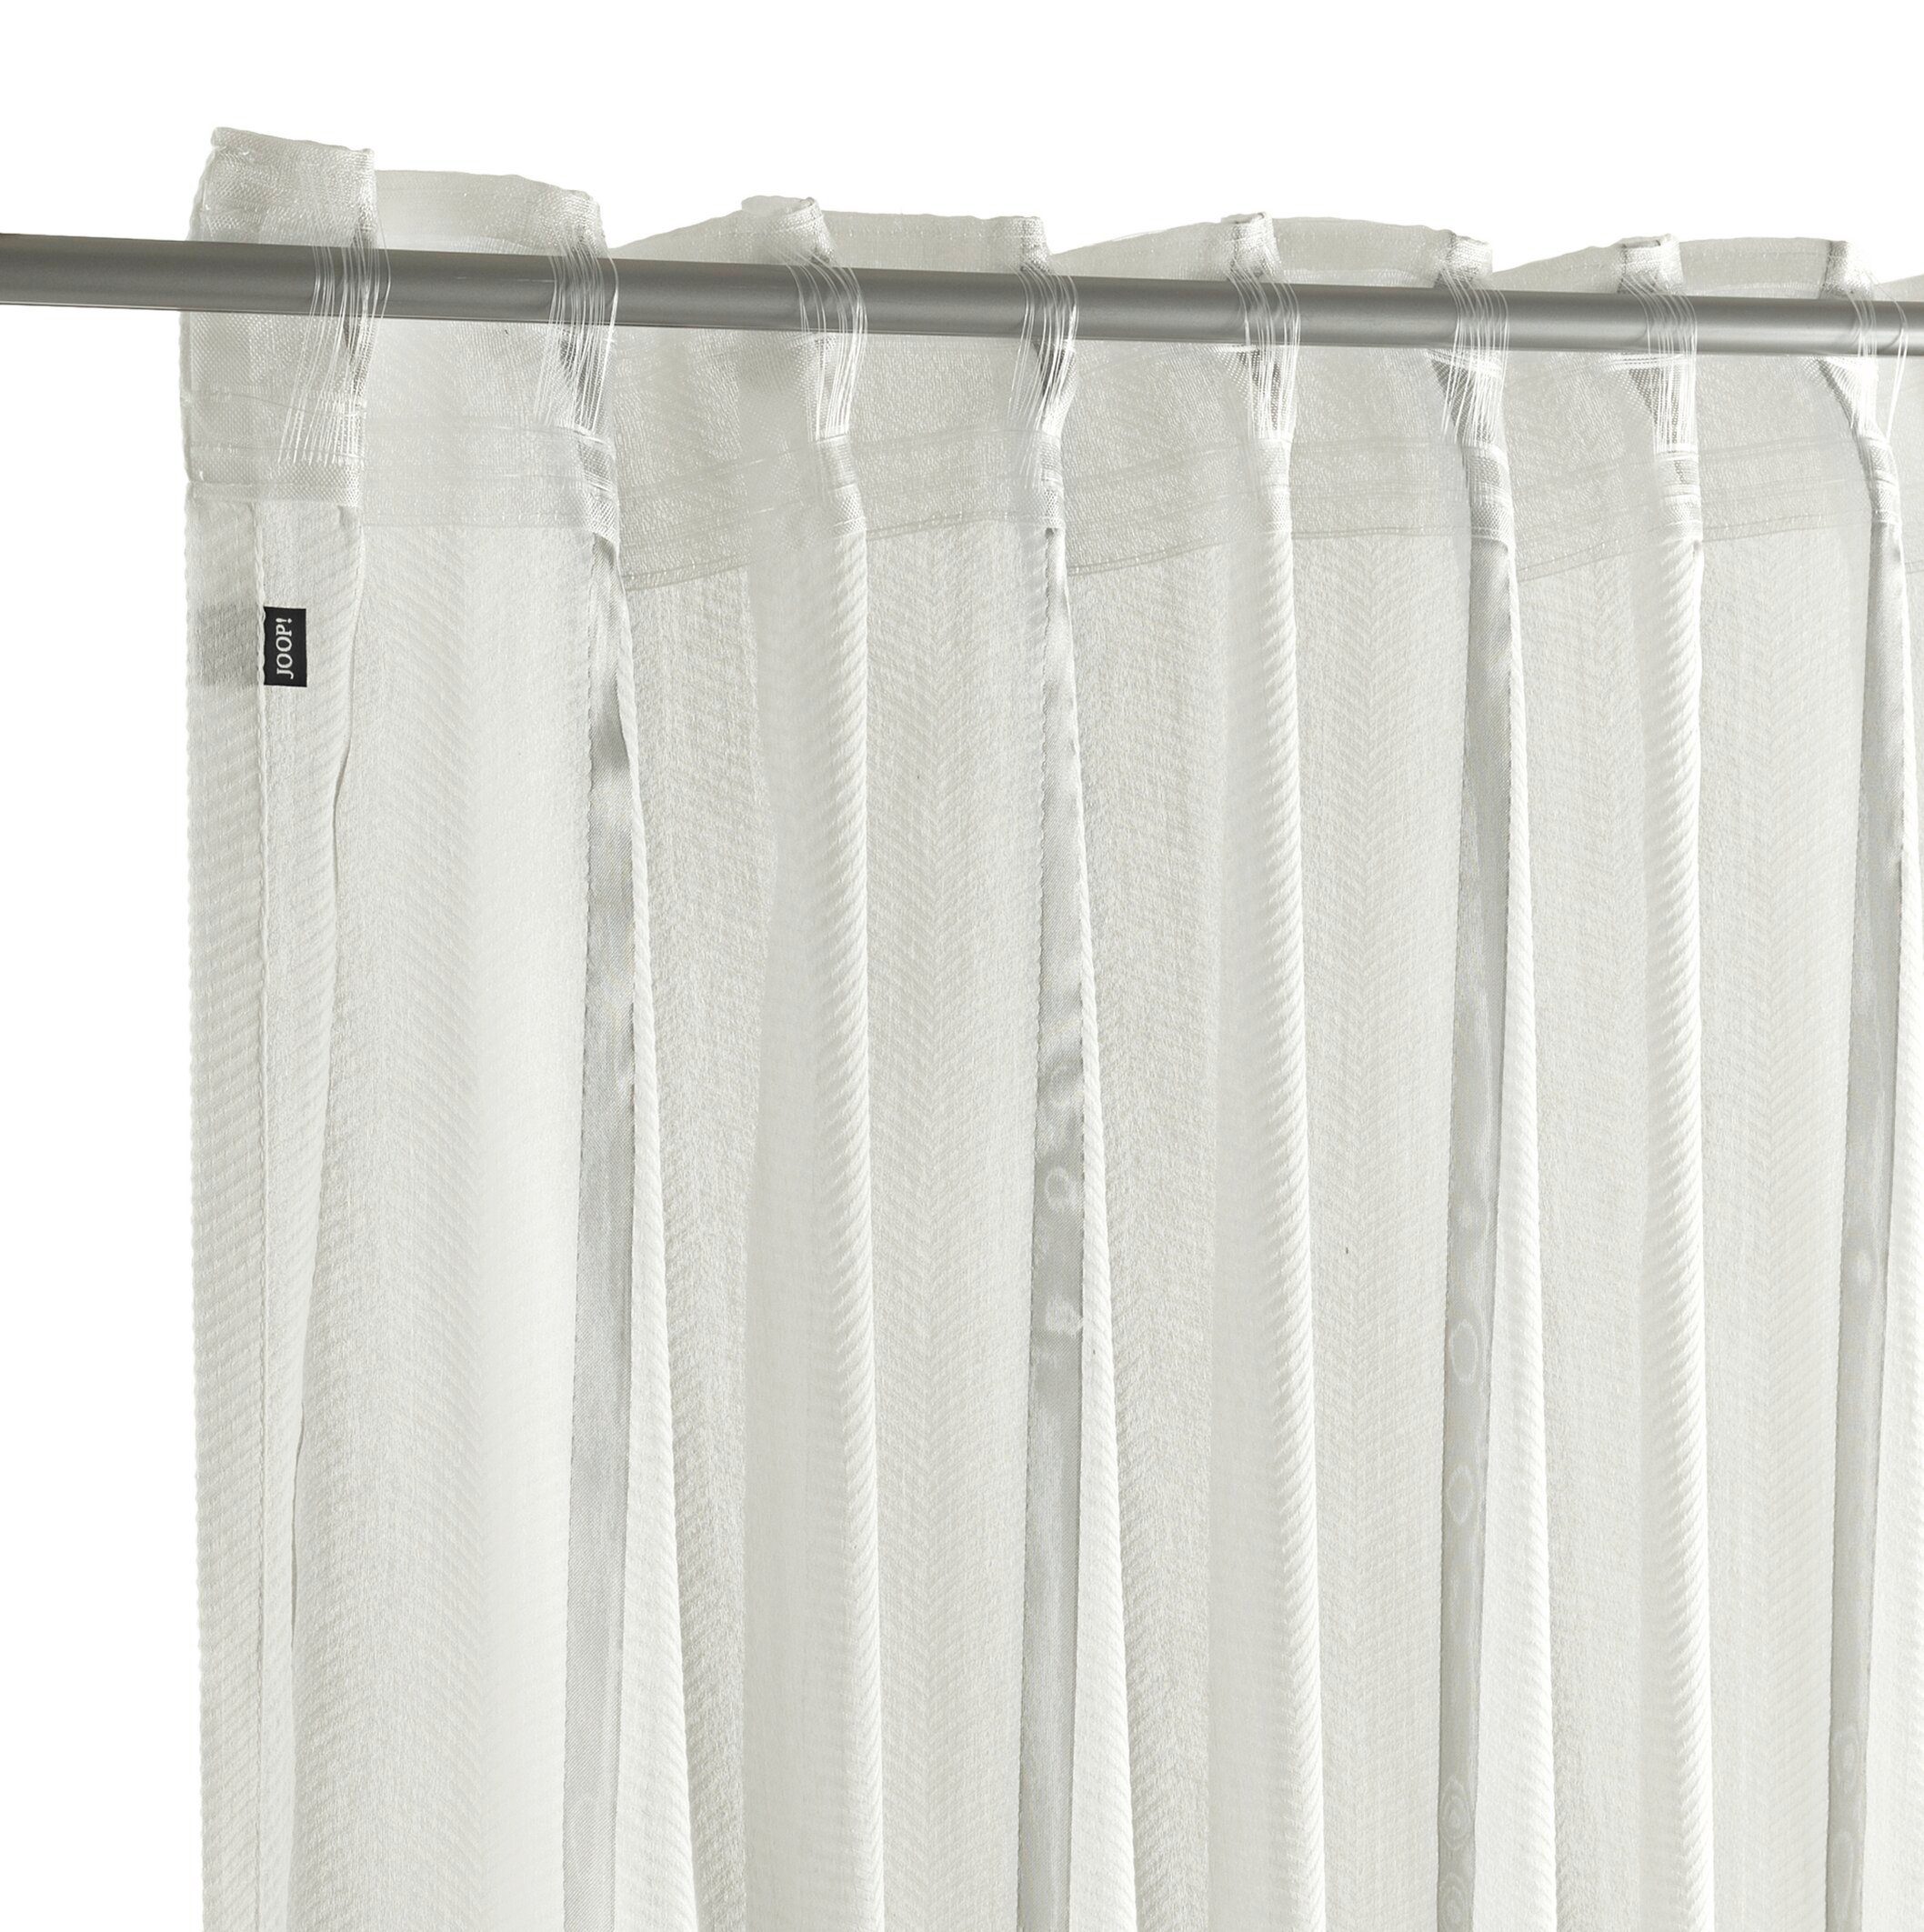 JOOP! - St), Textil transparent, Weiß-Natur LIVING (1 BOND Gardine Joop!, Fertiggardine,